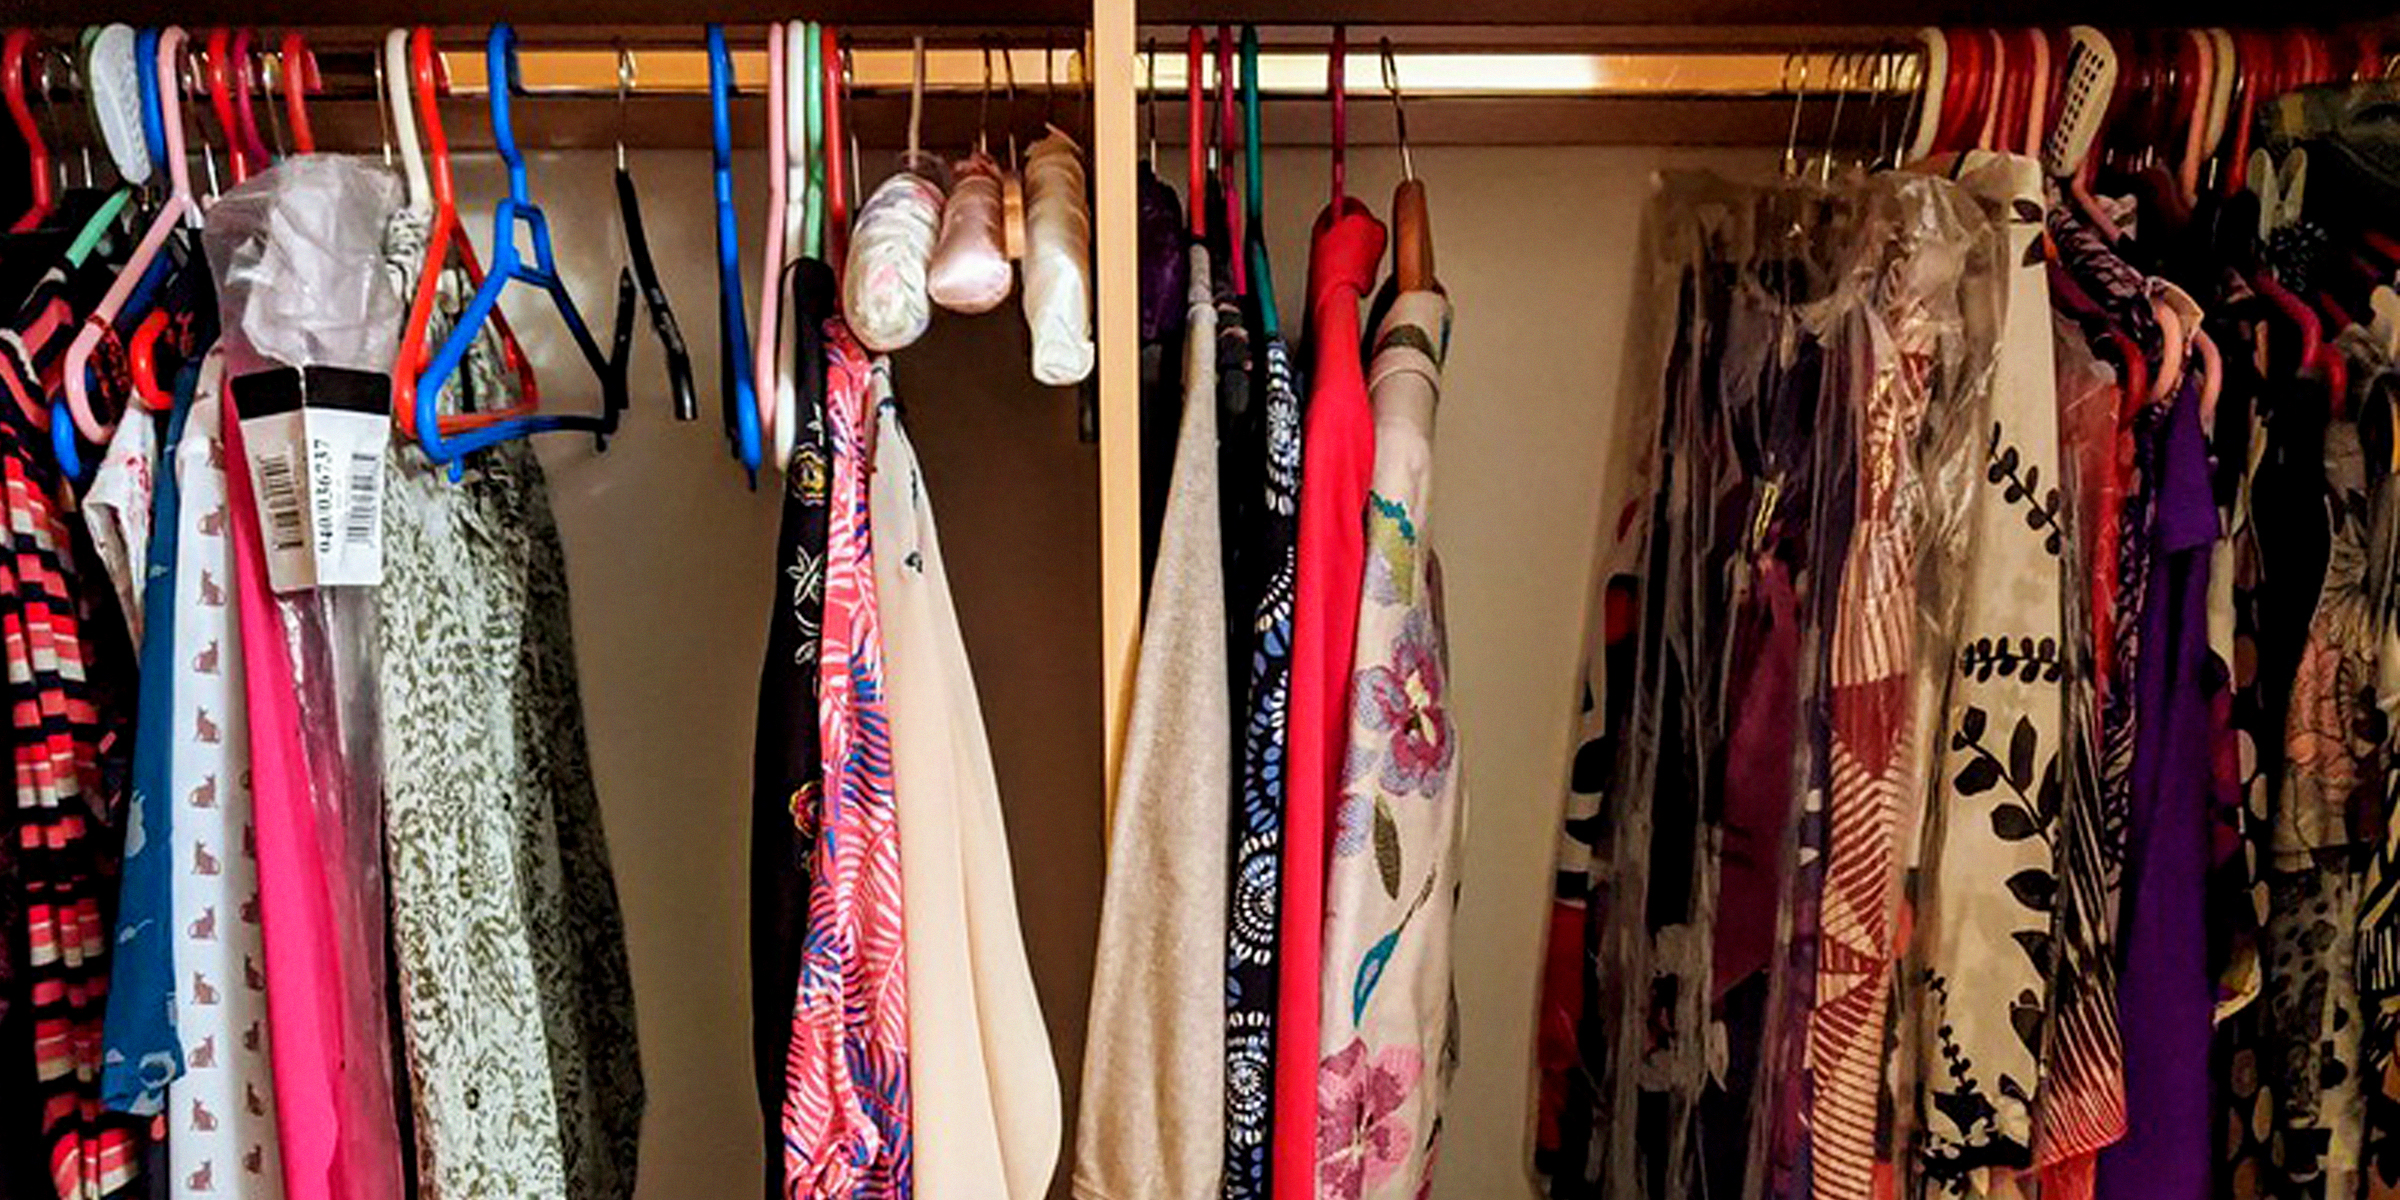 Woman's wardrobe | Source: Flickr